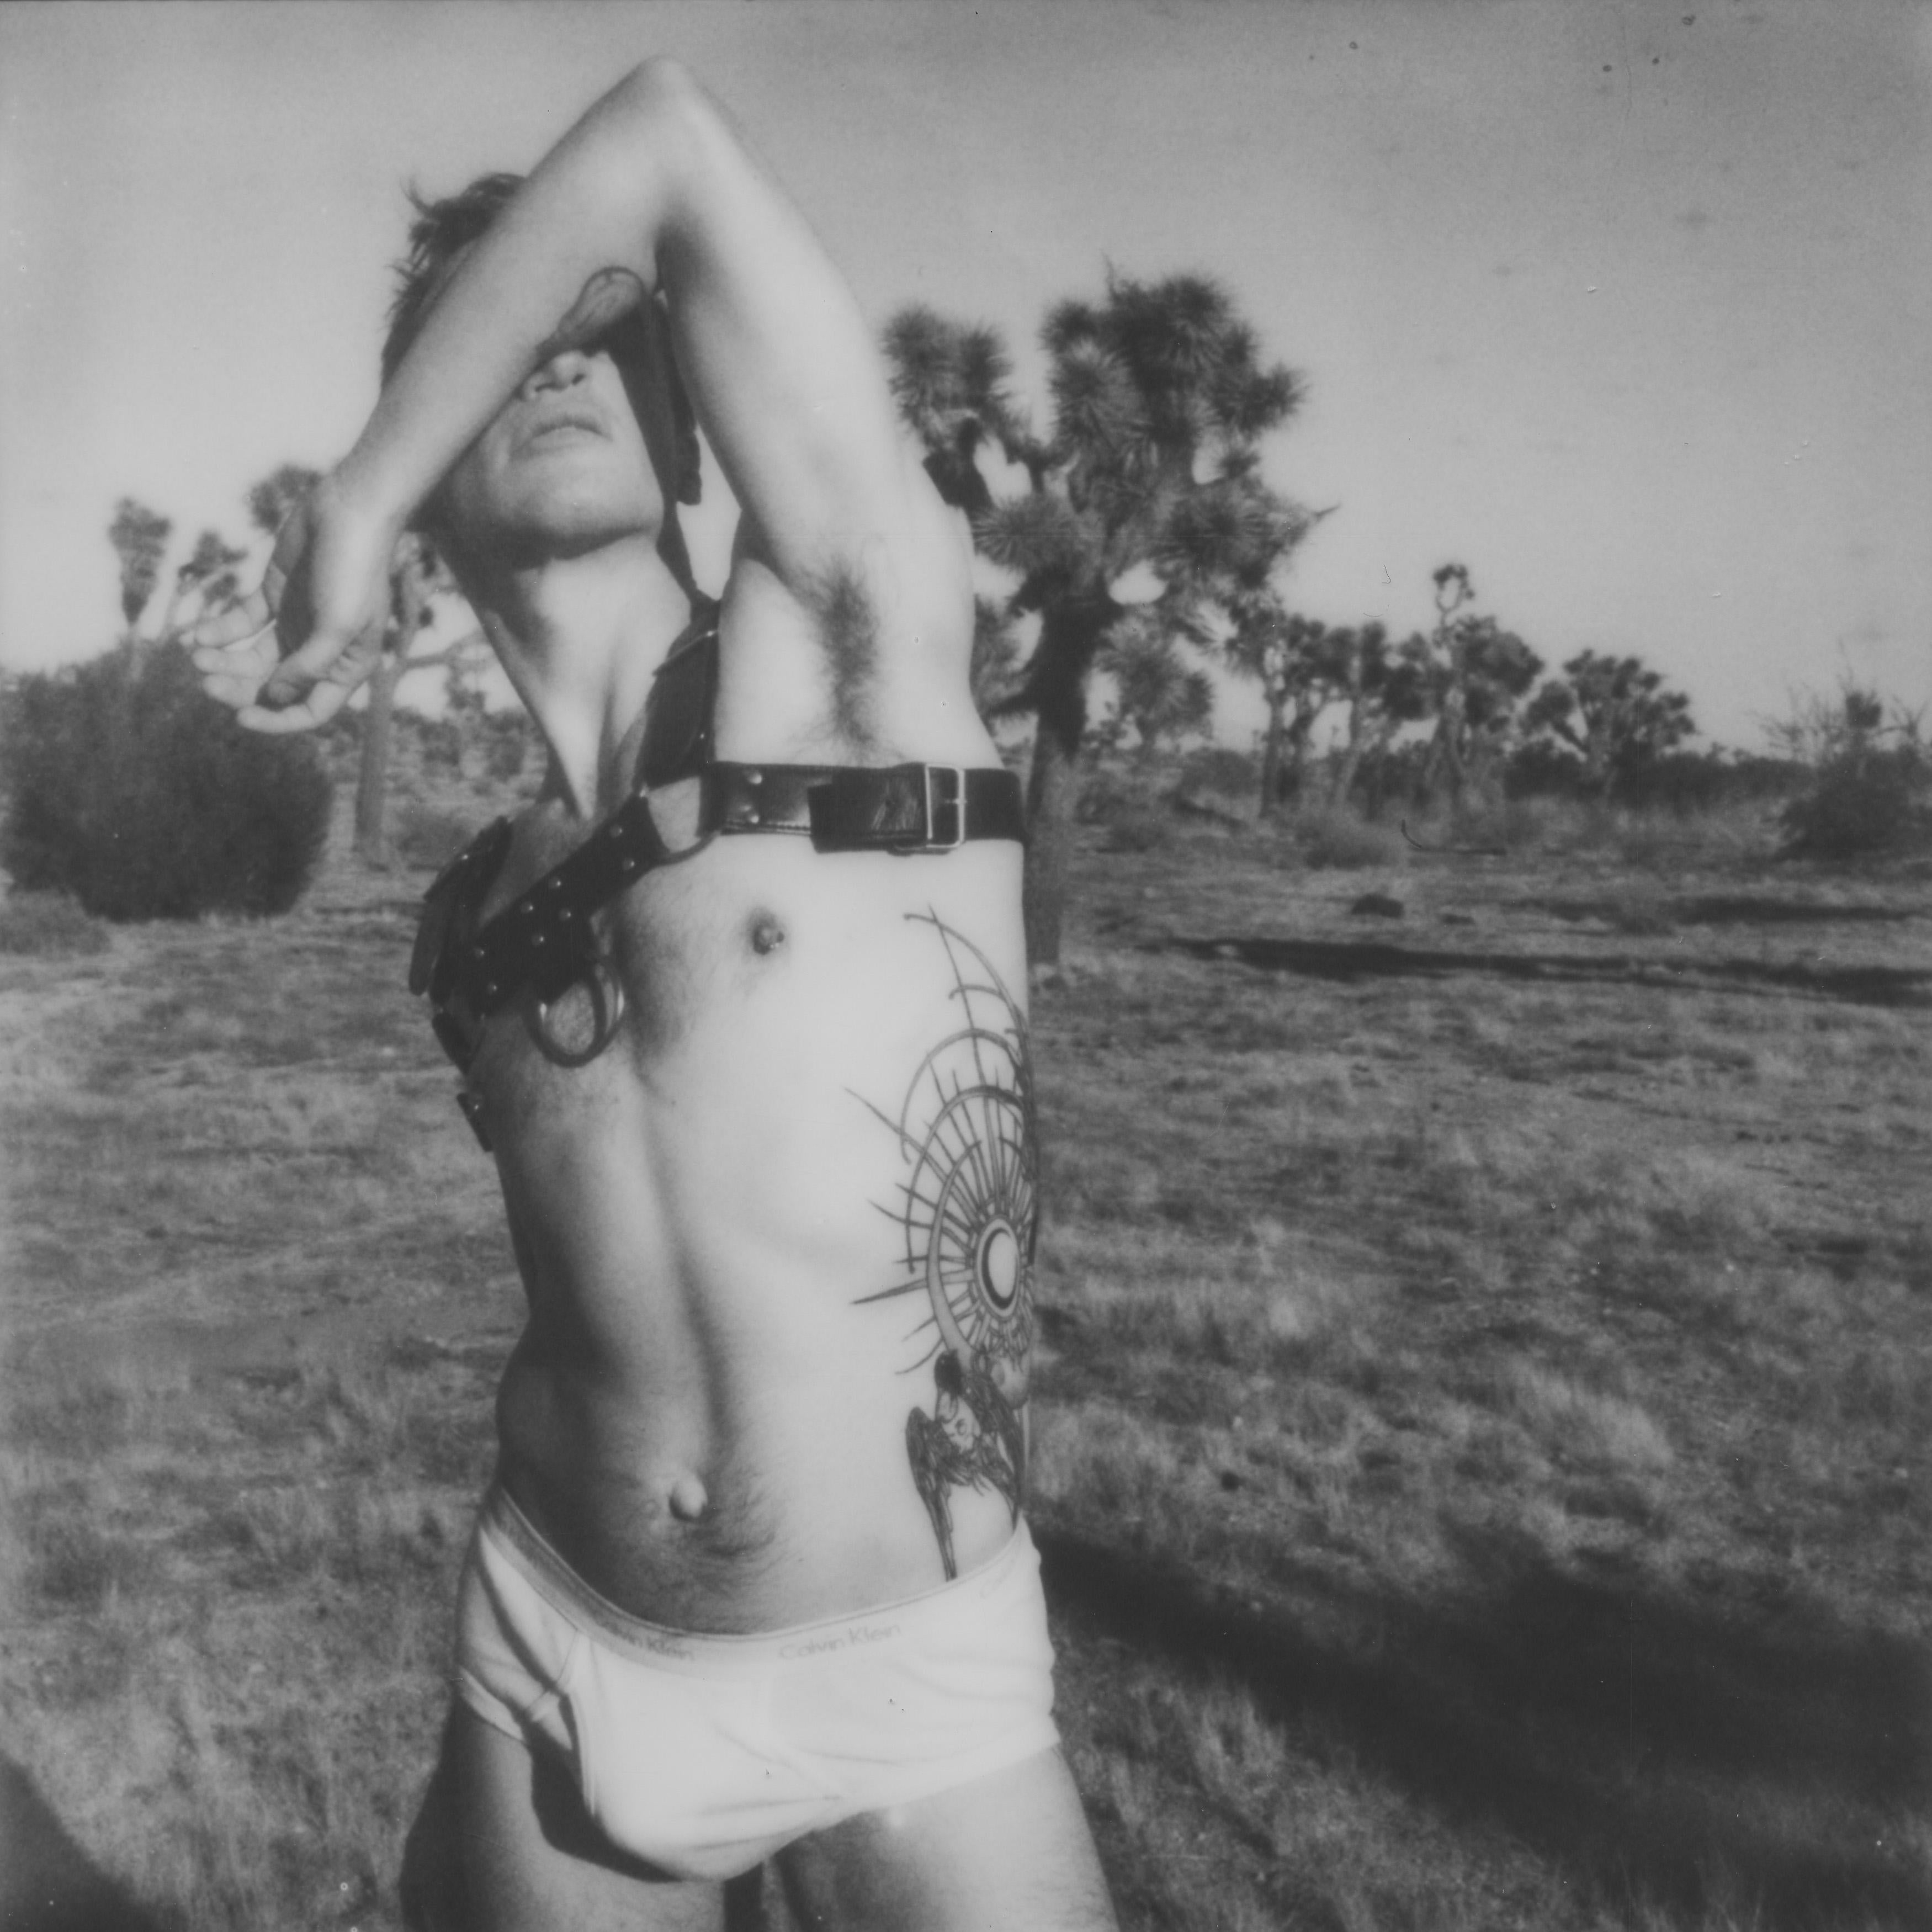 Nude Photograph Kirsten Thys van den Audenaerde - The Future's so bright - Contemporary, Polaroid, Nu, 21e siècle, Joshua Tree